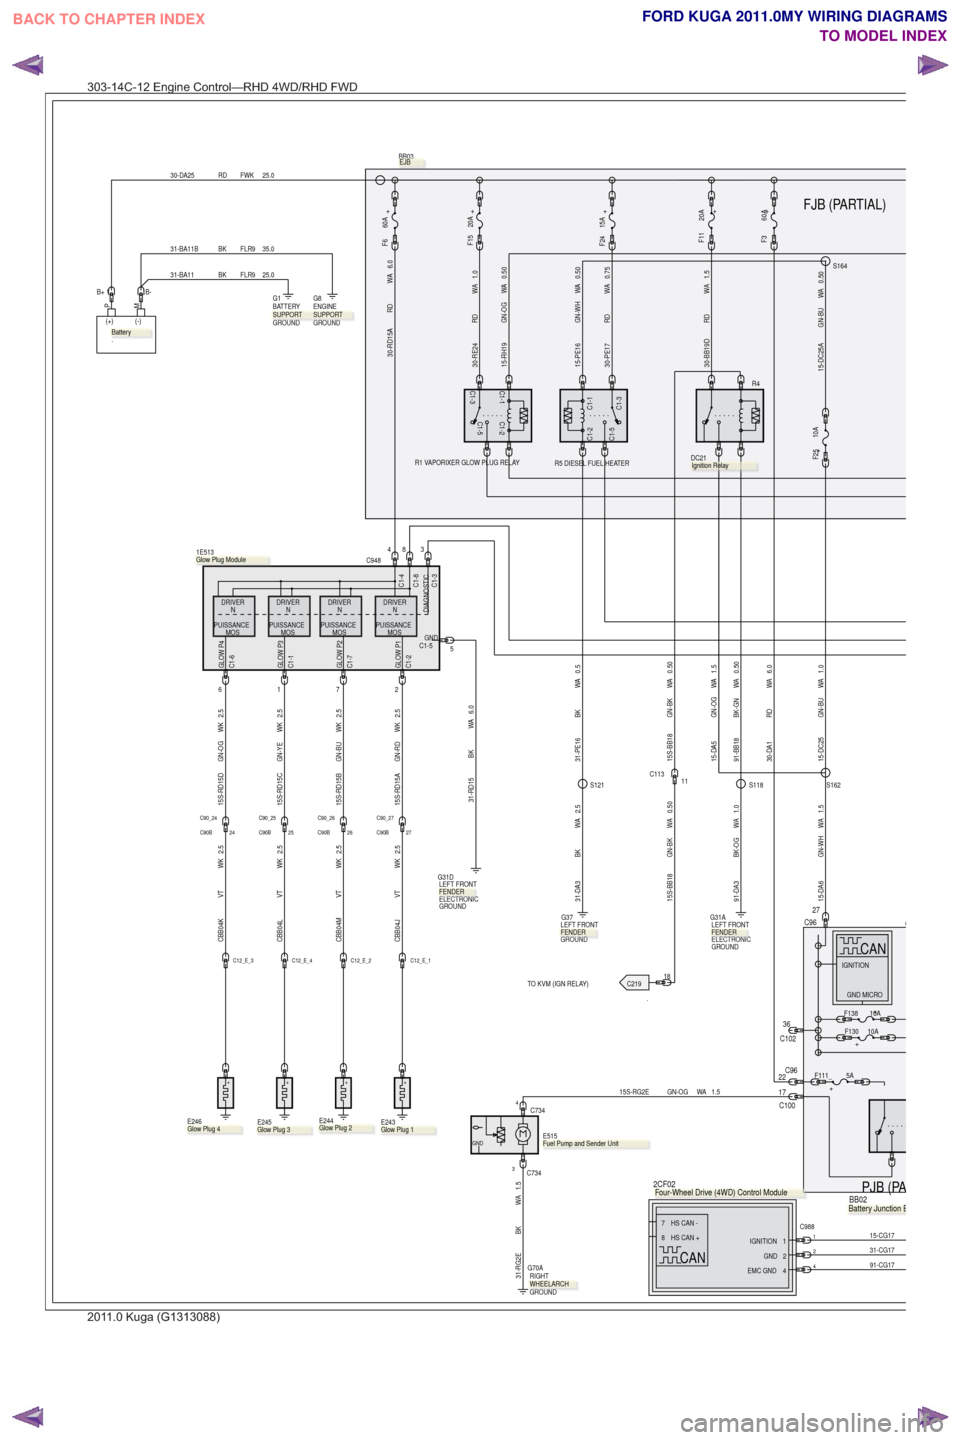 FORD KUGA 2011 1.G Wiring Diagram Workshop Manual .TO KVM (IGN RELAY)
FJB (PARTIAL)
PJB (PA
+60AF6
BB03.
PM
(+) (-)
.
25.0
FWK
RD
30-DA25
+
E244
.
+
.
E246
+
.
E245
+
.
E243
C1-5
C1-1C1-3
C1-2
R5 DIESEL FUEL HEATER
+15AF24
30-PE17 RD WA 0.75
C102 36
